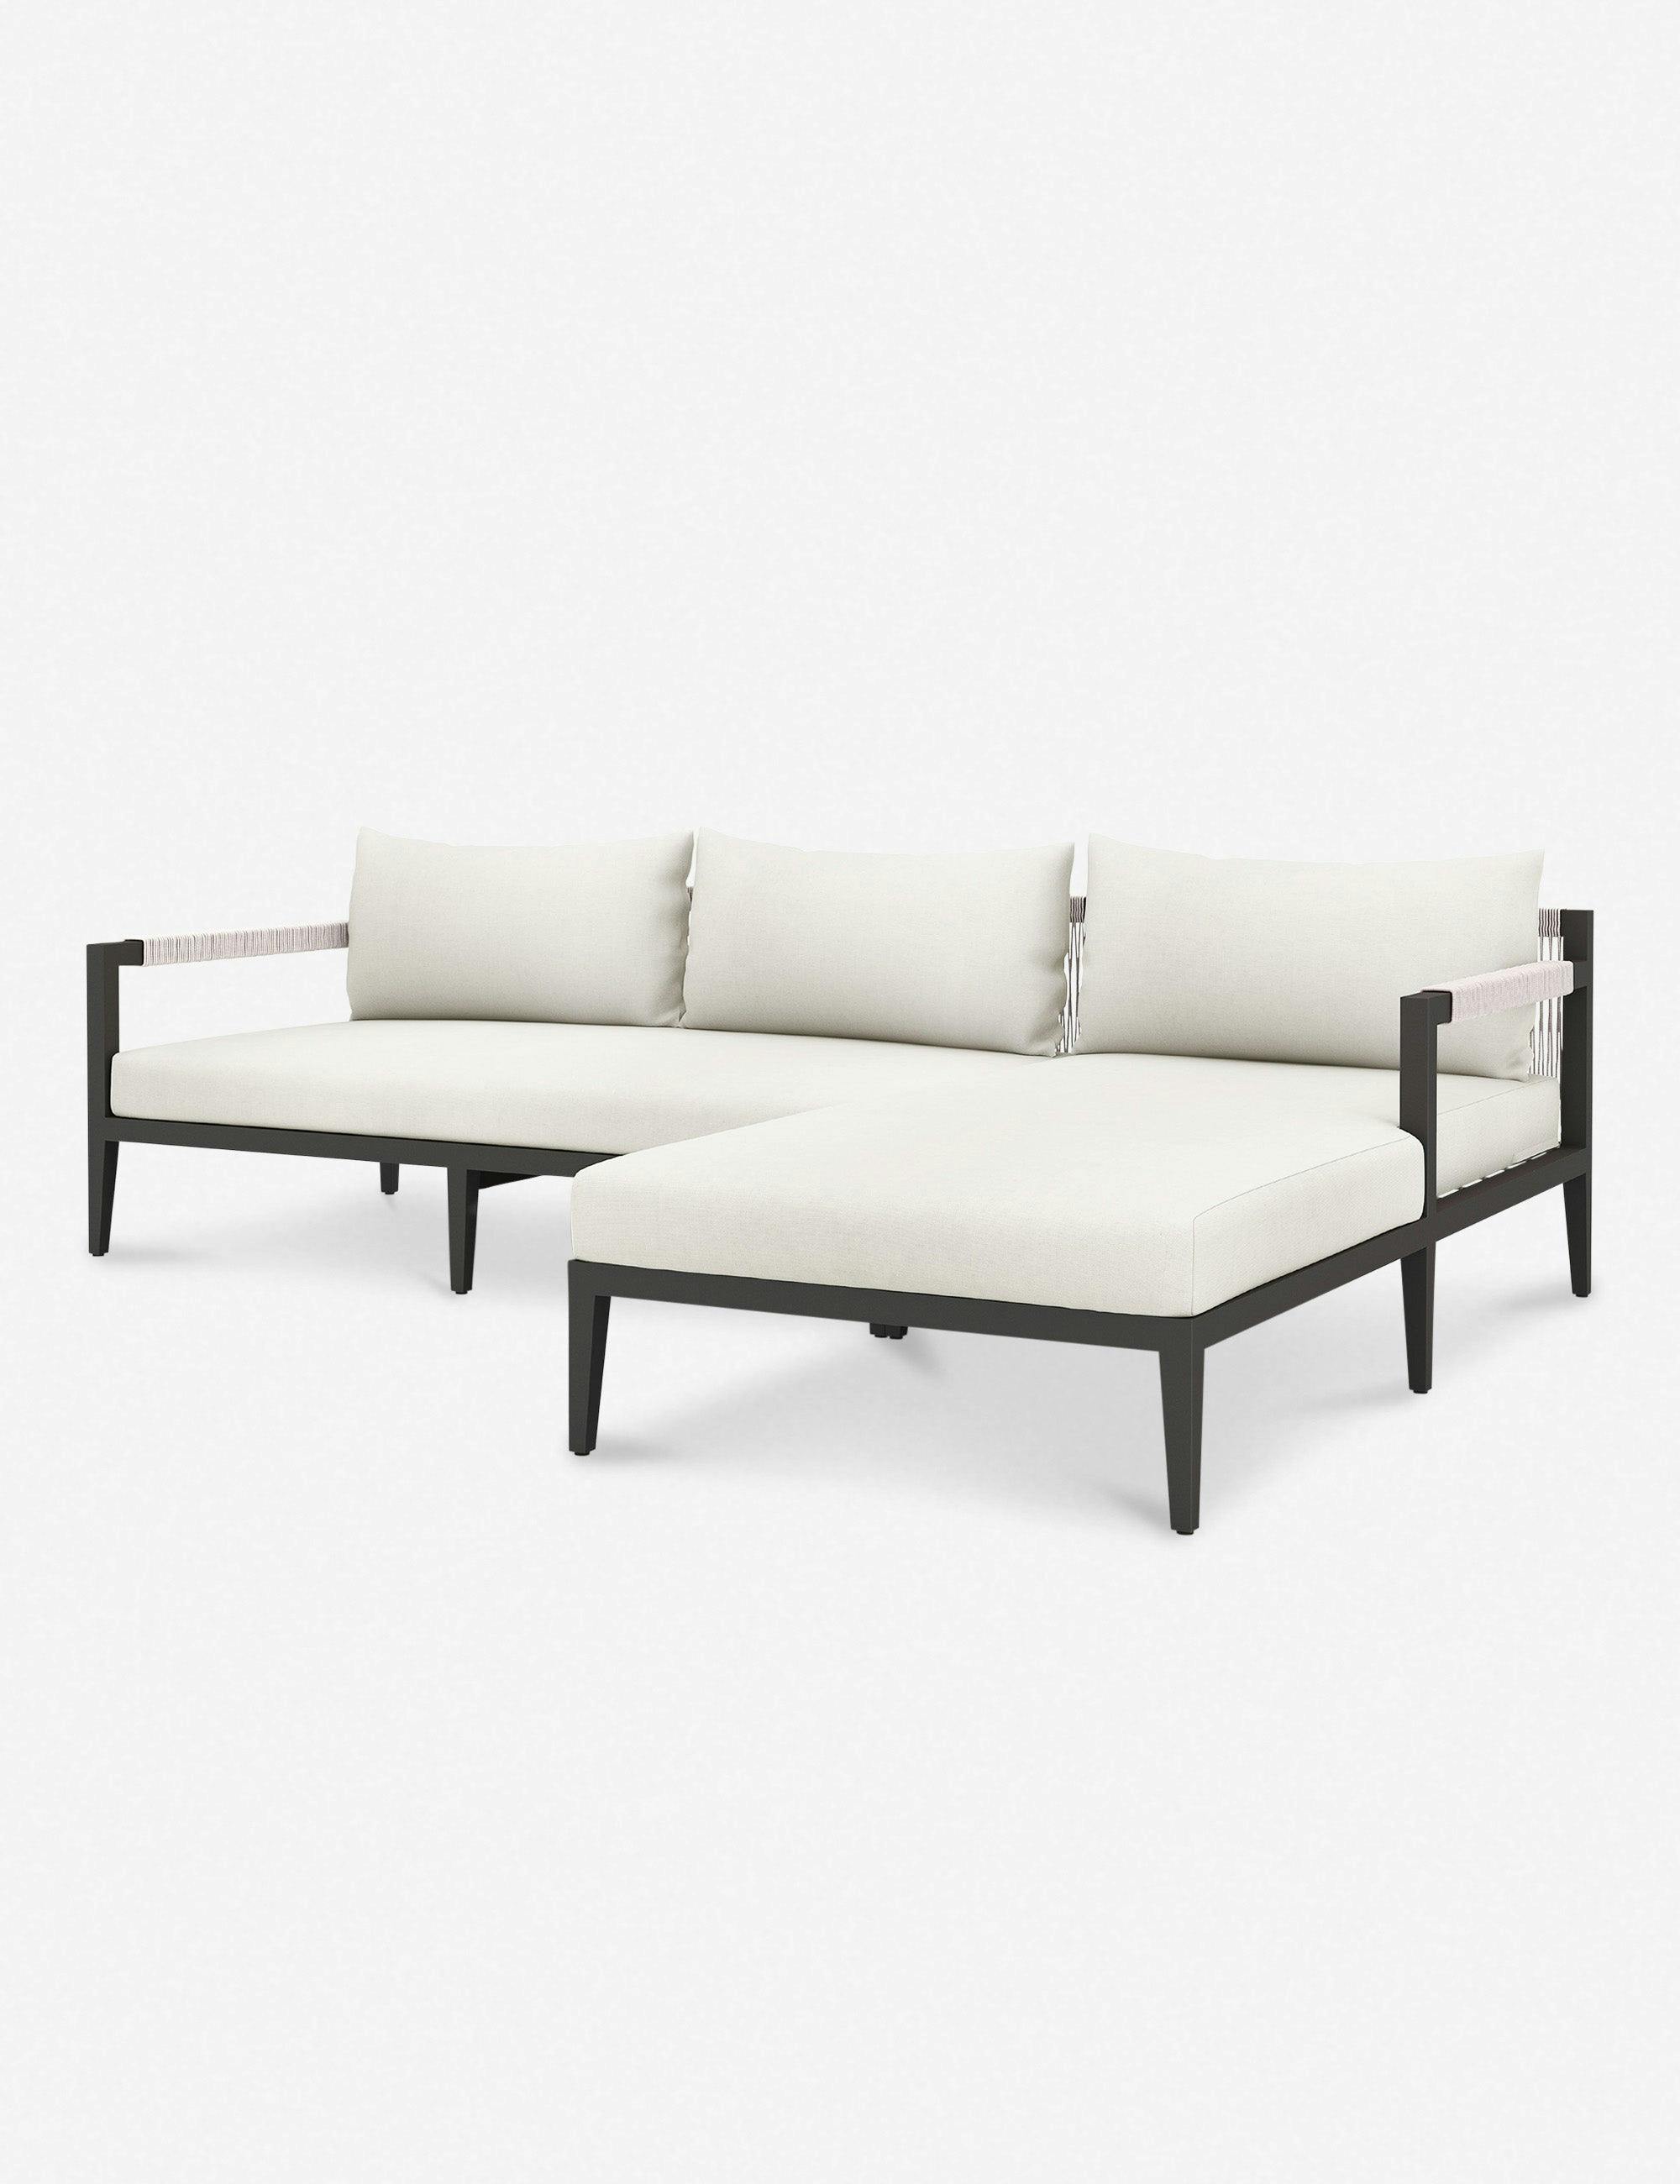 Cadenza Bronze/Ivory Metal 3-Seat Outdoor Sectional Sofa